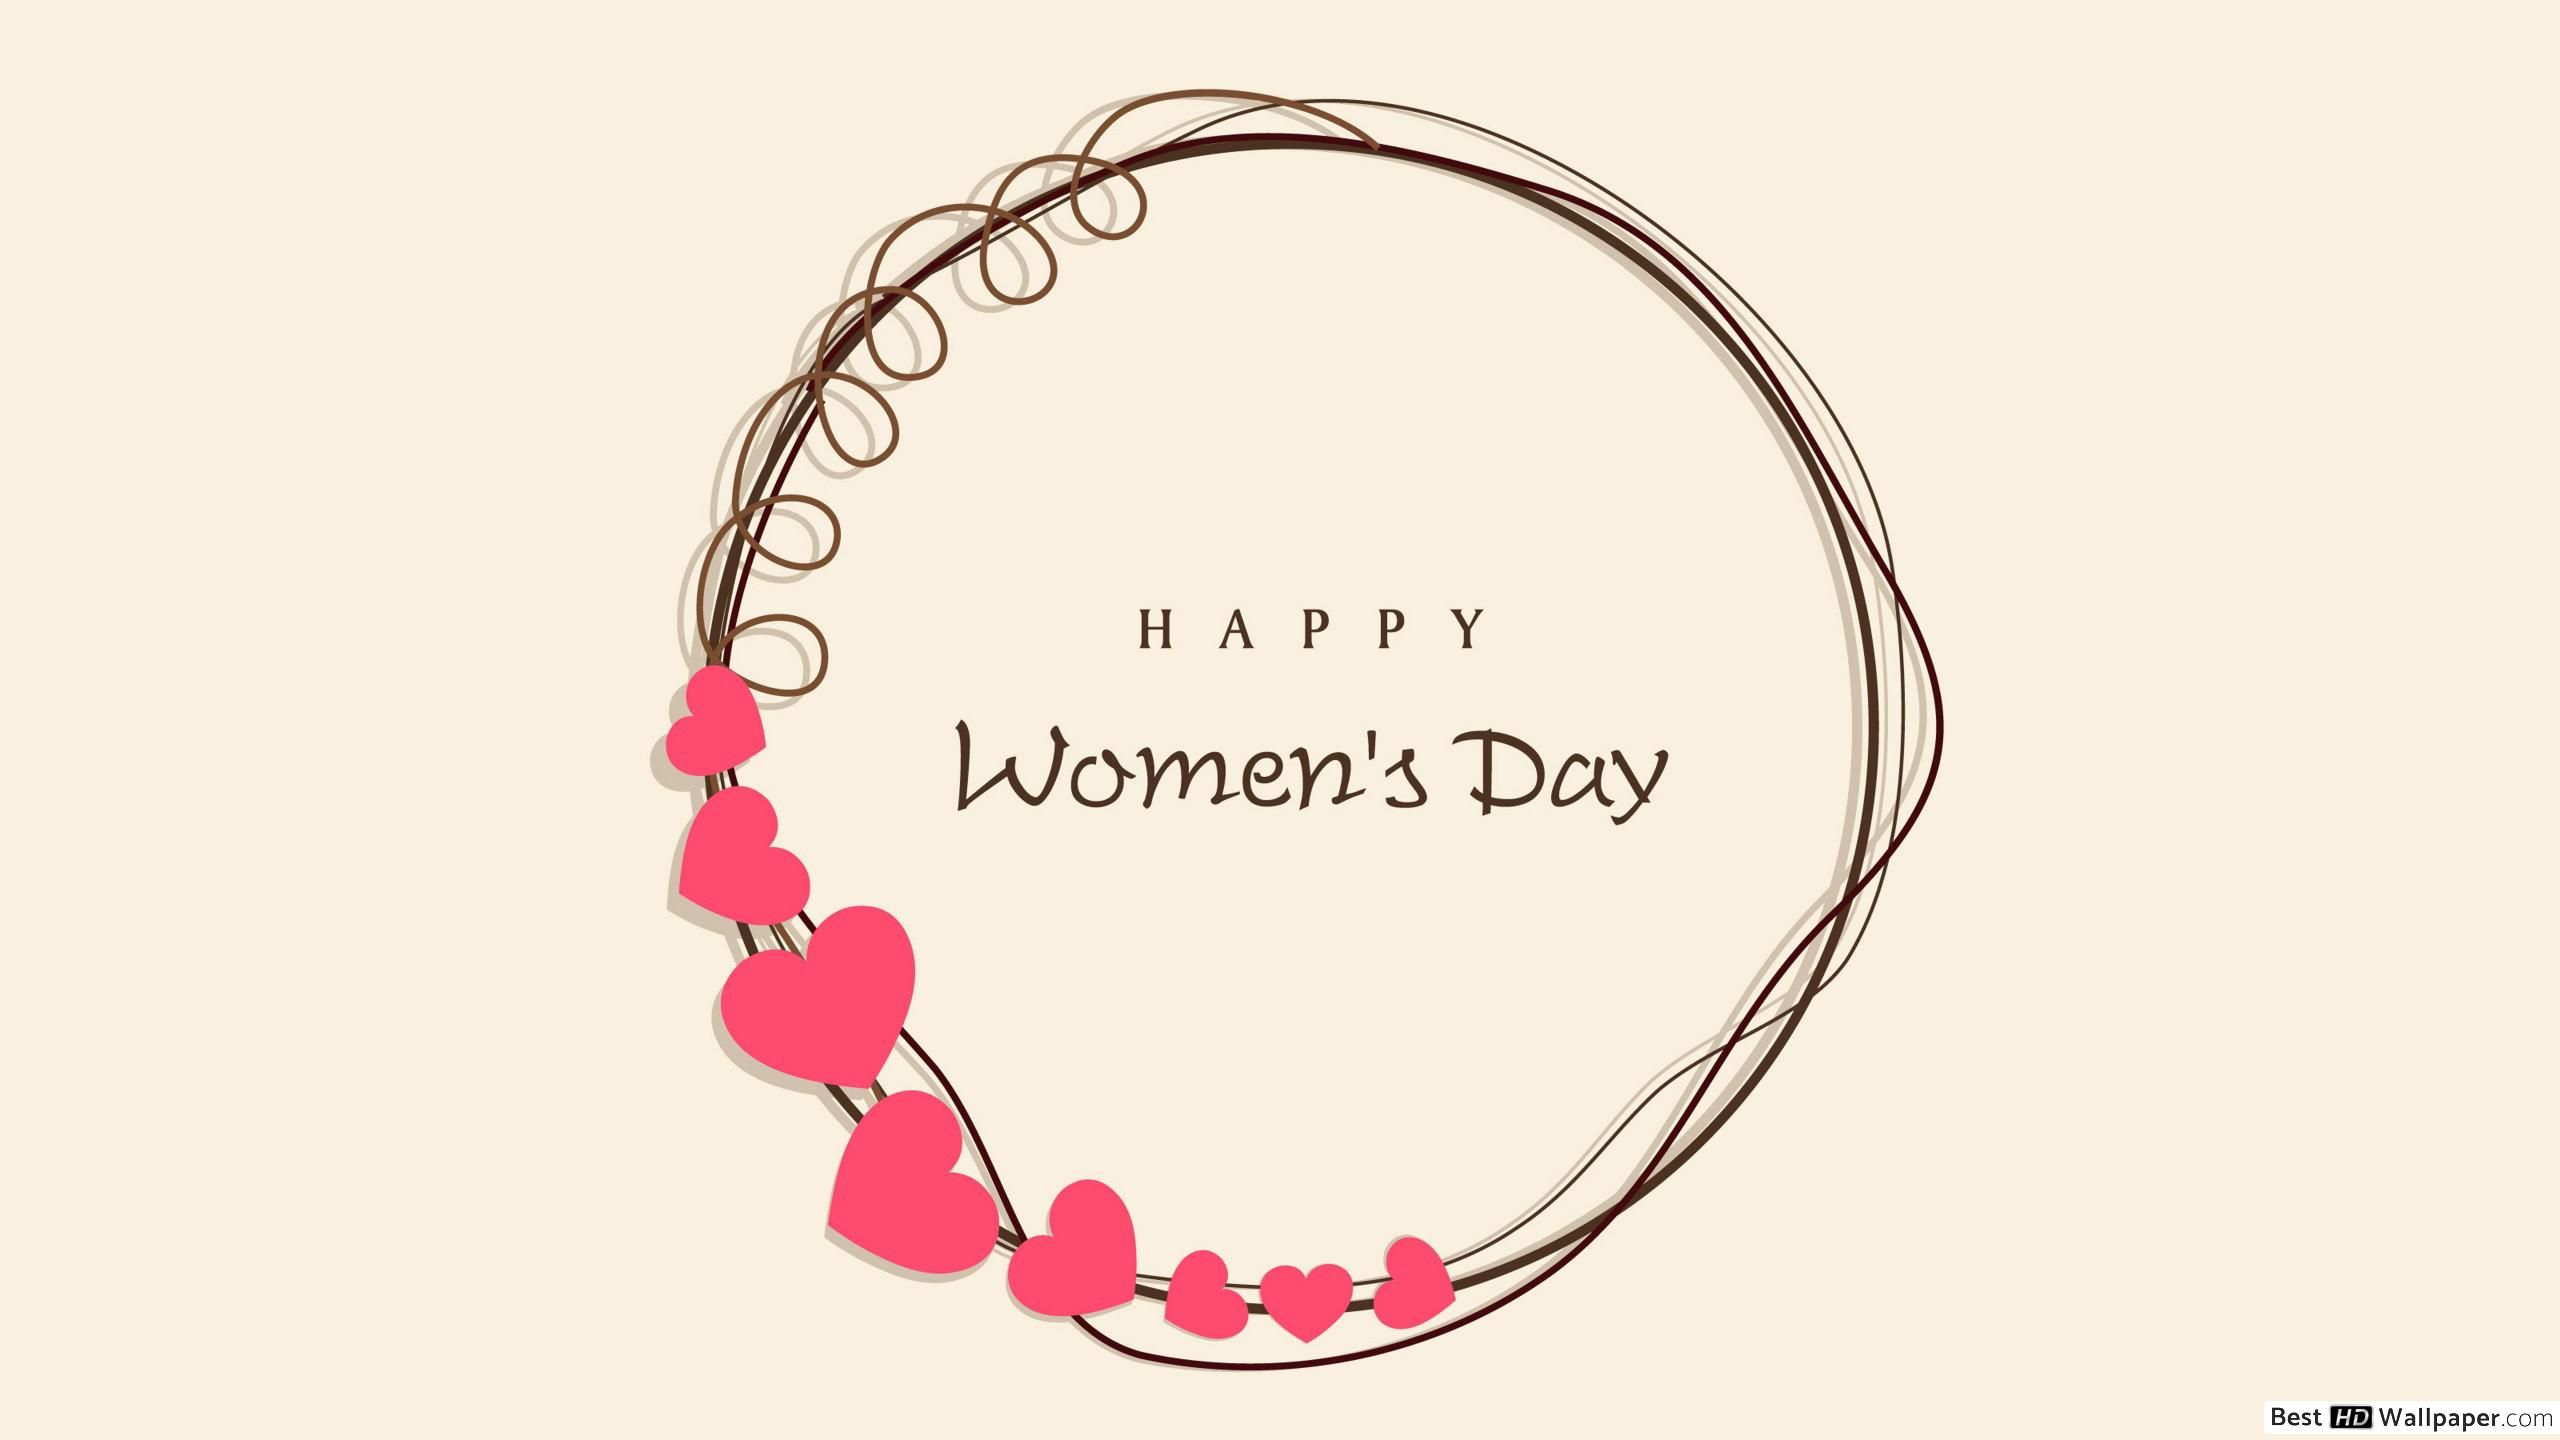 Women's Day wishes HD wallpaper .besthdwallpaper.com